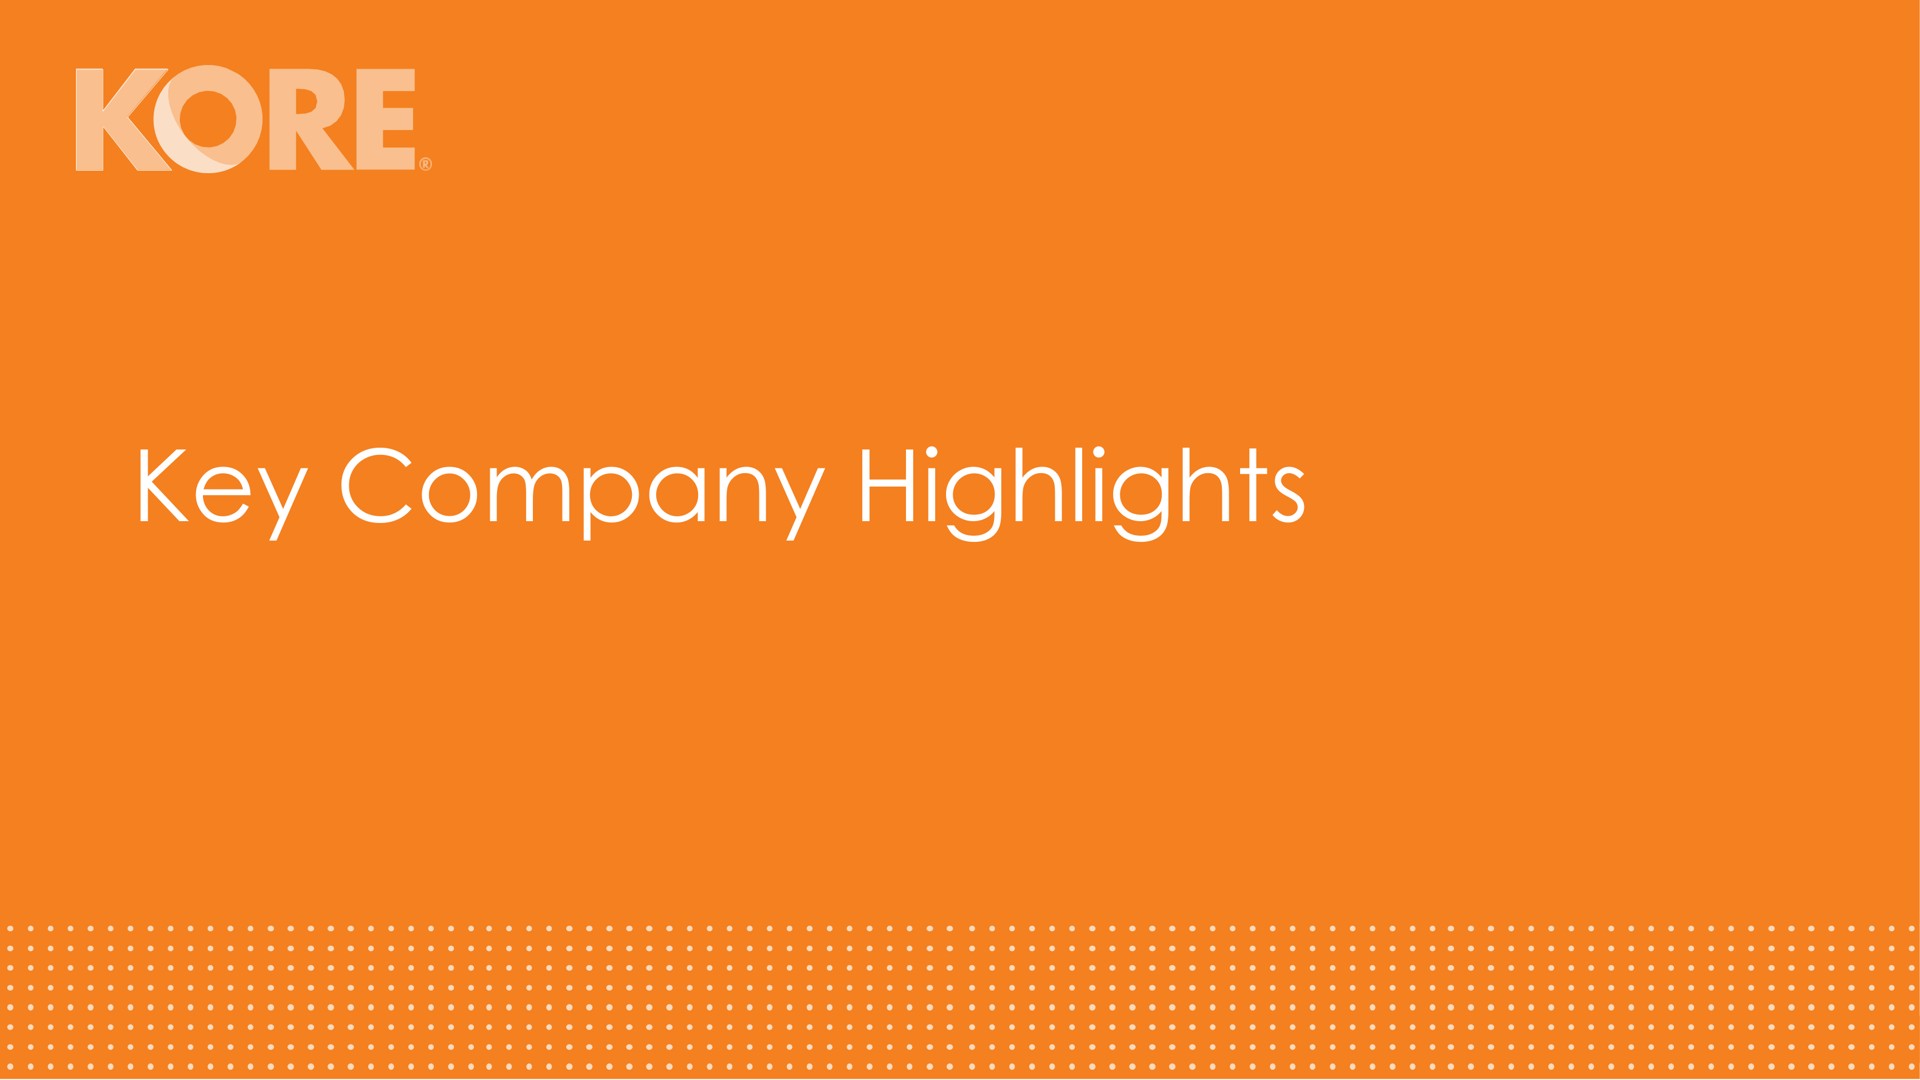 key company highlights kore | Kore